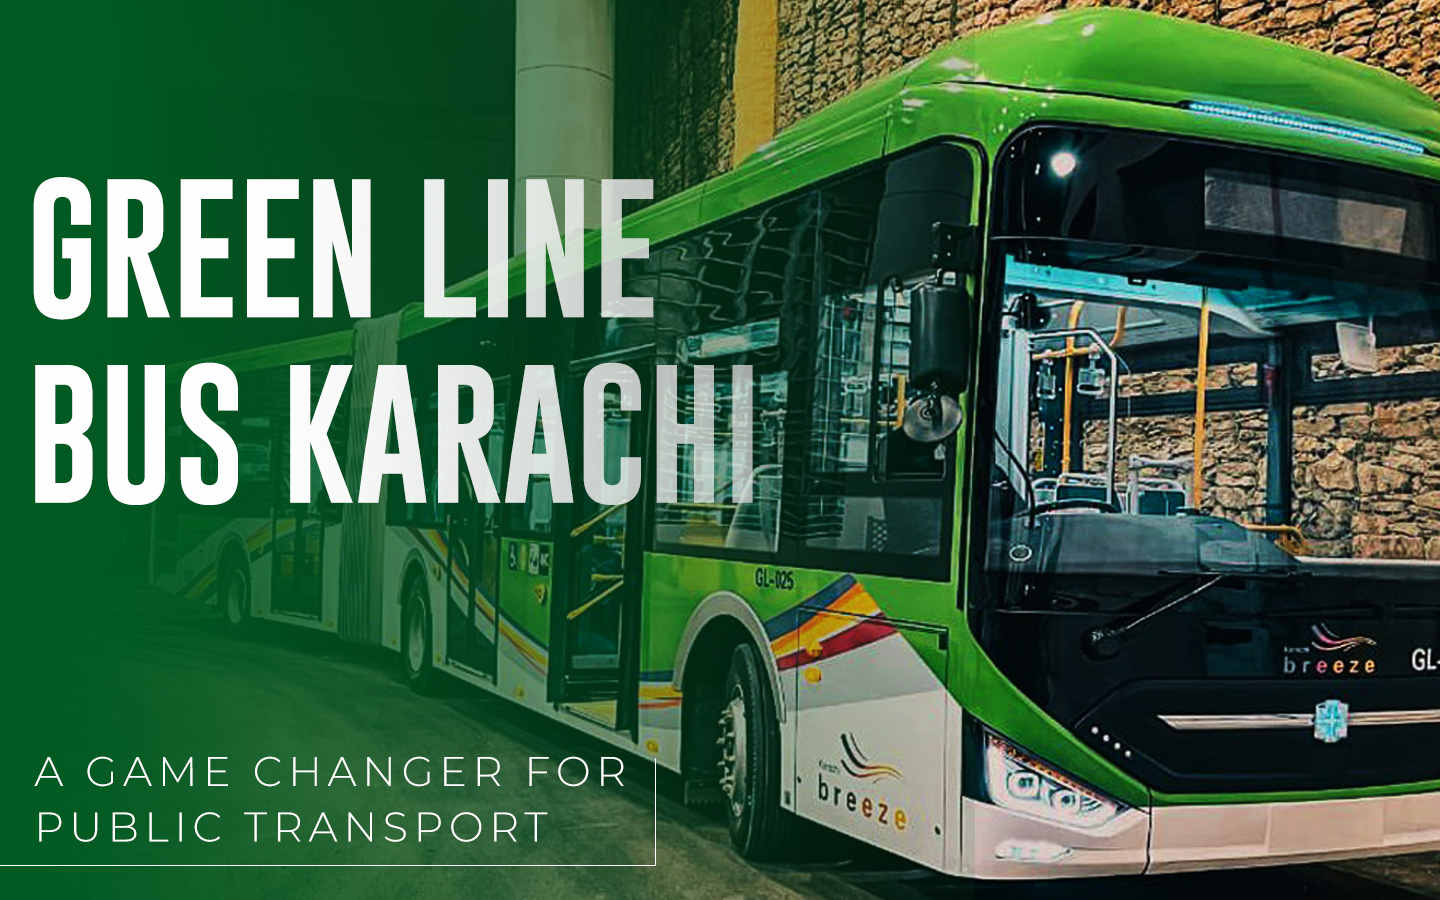 Green Line Bus Karachi A Game Changer for Public Transport